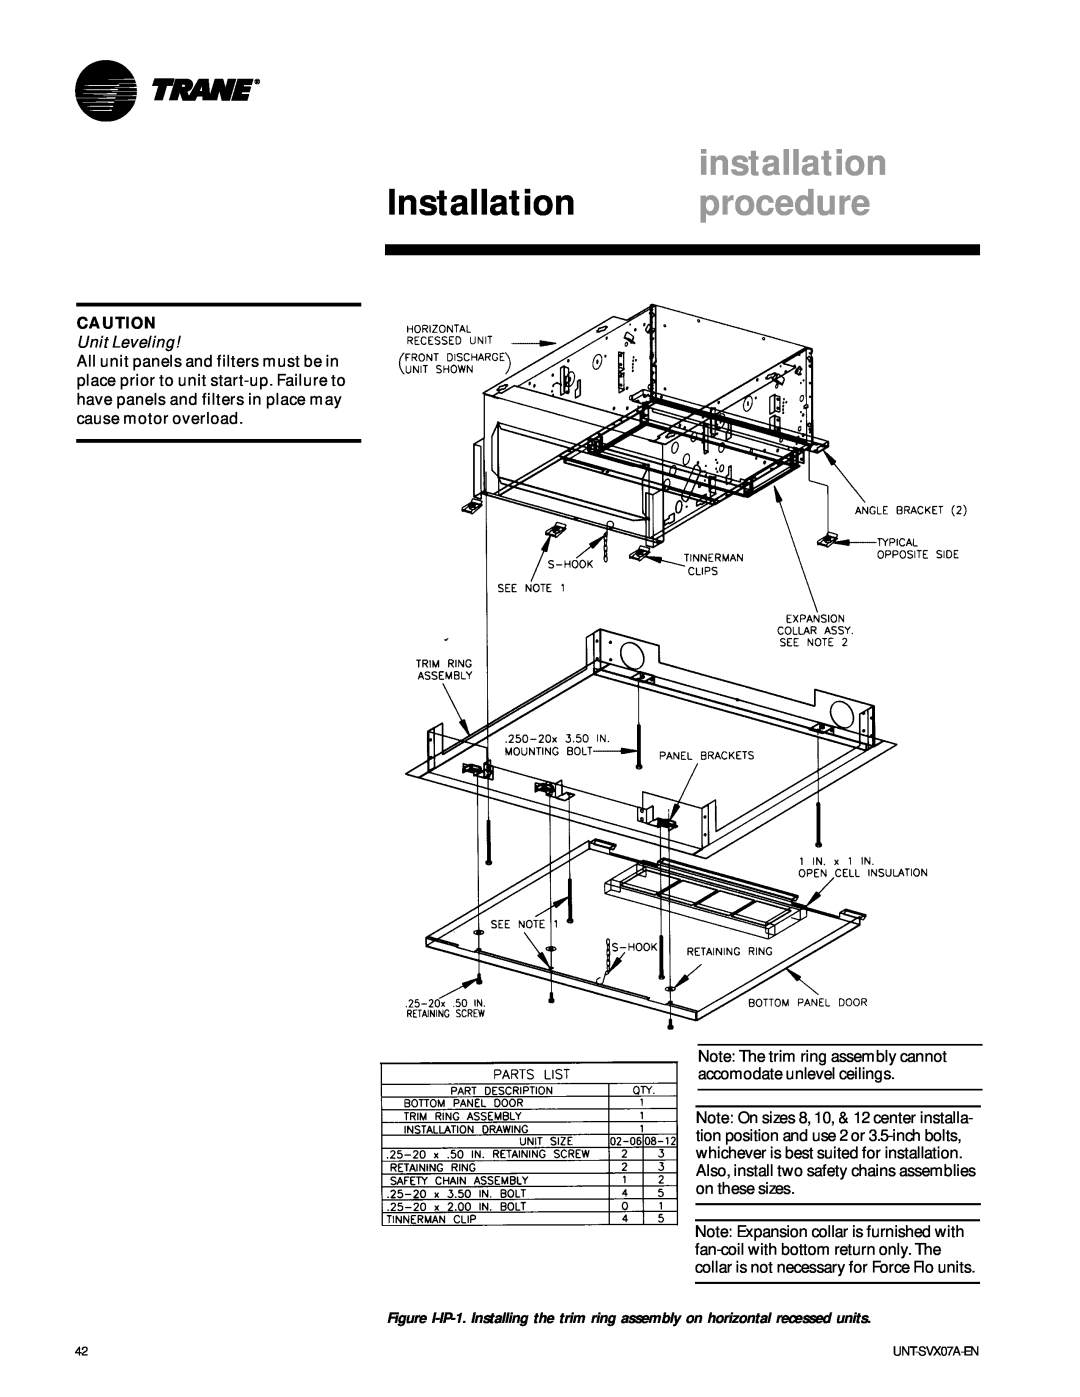 Trane UNT-SVX07A-EN, UniTrane Fan-Coil & Force Flo Air Conditioners installation, Installation procedure, Unit Leveling 